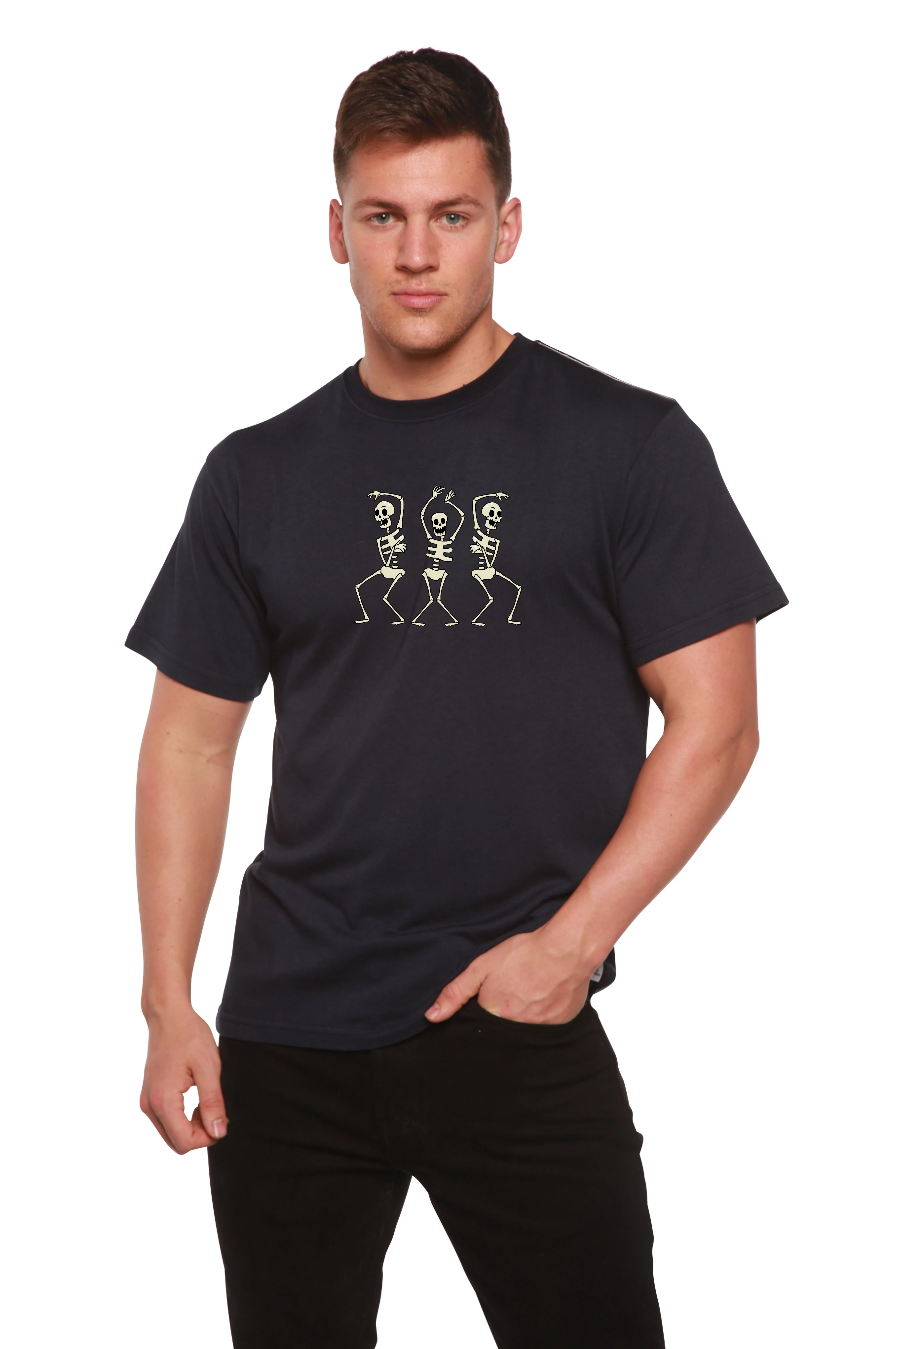 Dancing Skeletons Bamboo Viscose/Organic Cotton Short Sleeve Printed T-Shirt